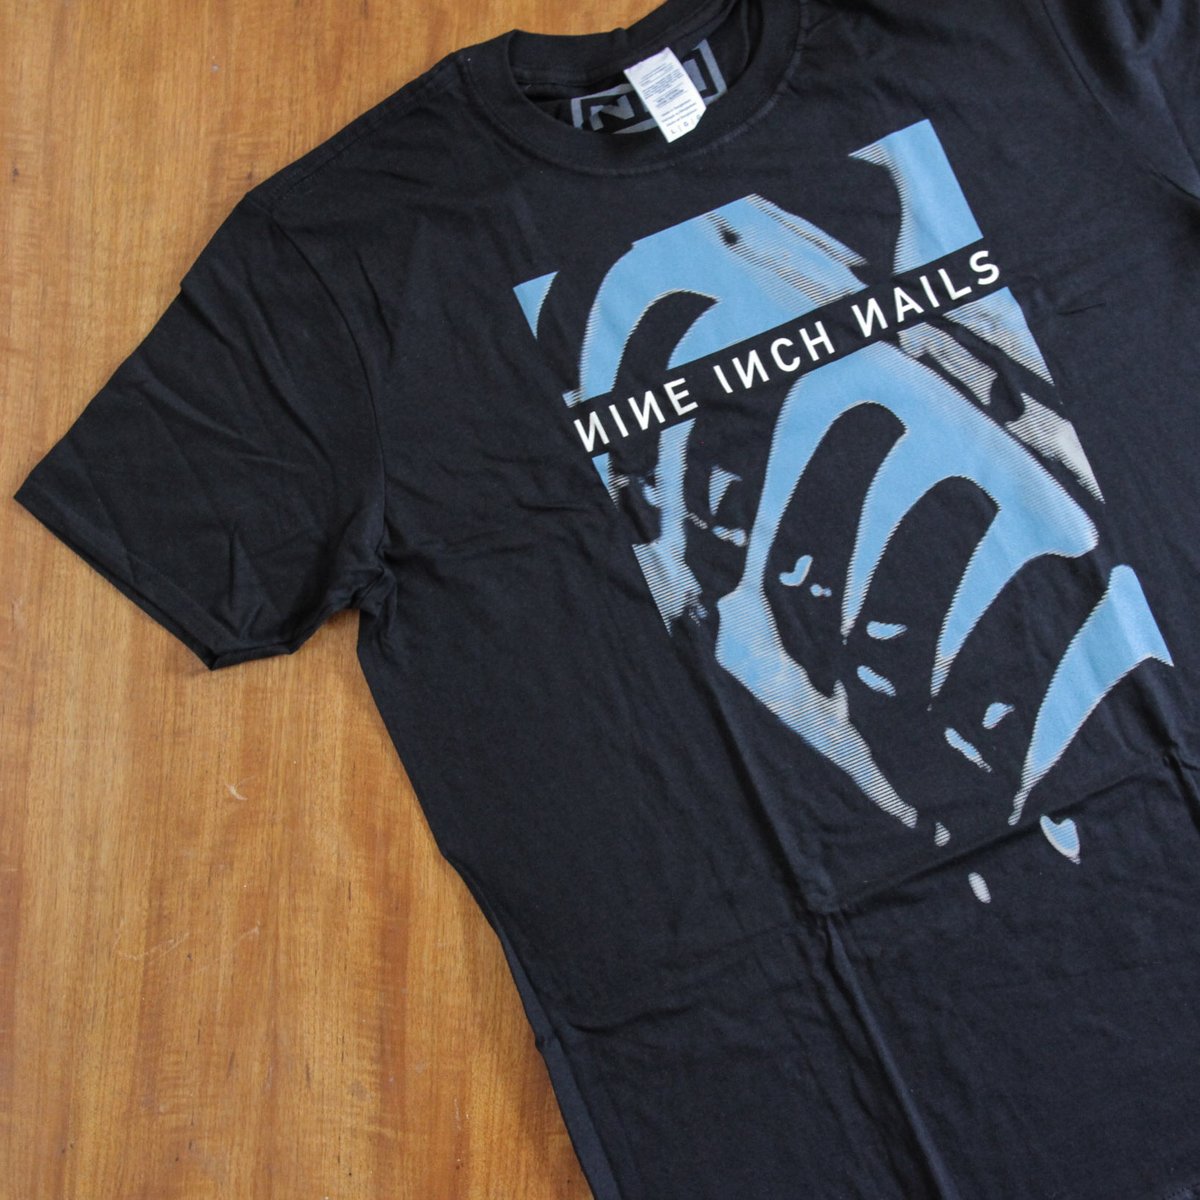 For Sale 
Nine Inch Nails - Pretty Hate Machine T-Shirt 
Size L 
350K 

Order Now: 

Bukalapak bukalapak.com/u/acerocker77
Tokopedia tokopedia.com/kiba777 

#jajanrock #kaosband #kaosmusik #musicmerch #nineinchnails #industrial